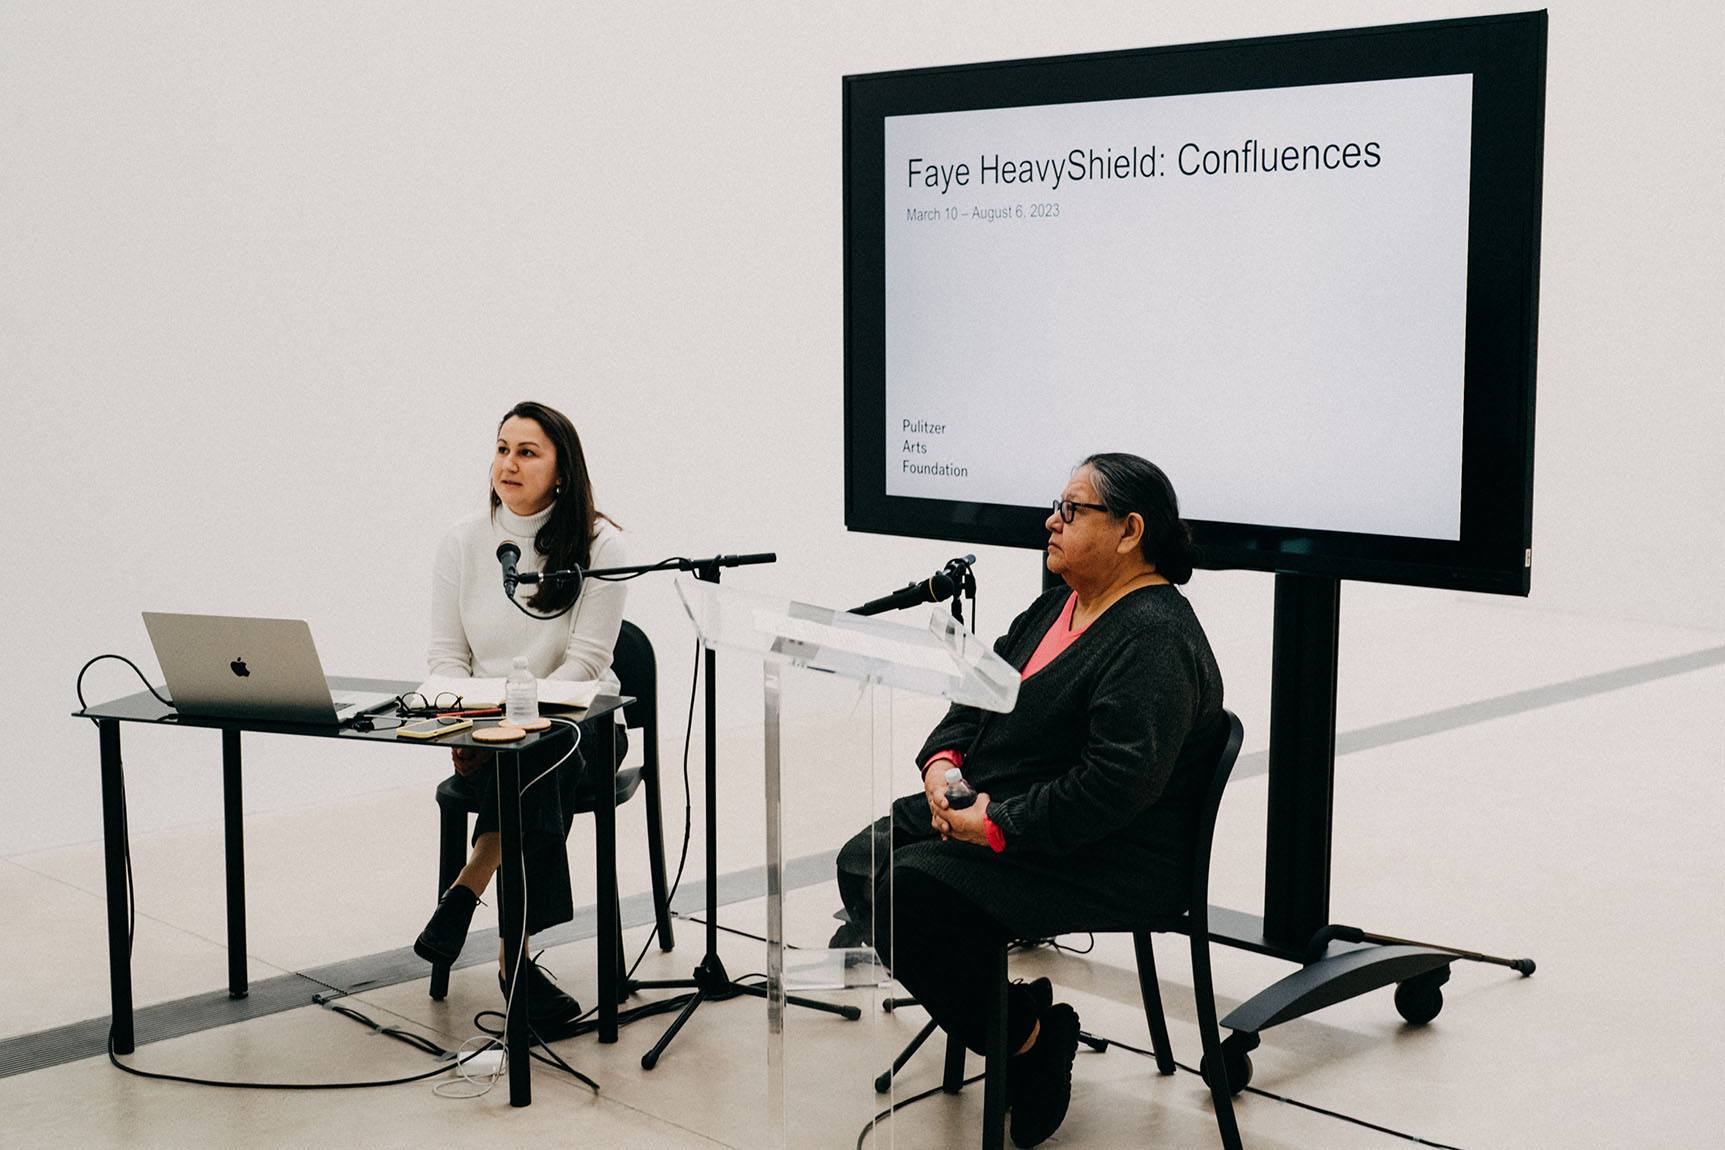 Curator of the Pulitzer, Tamara Schenkenberg and artist, Faye HeavyShield, sitting down speaking to an audience